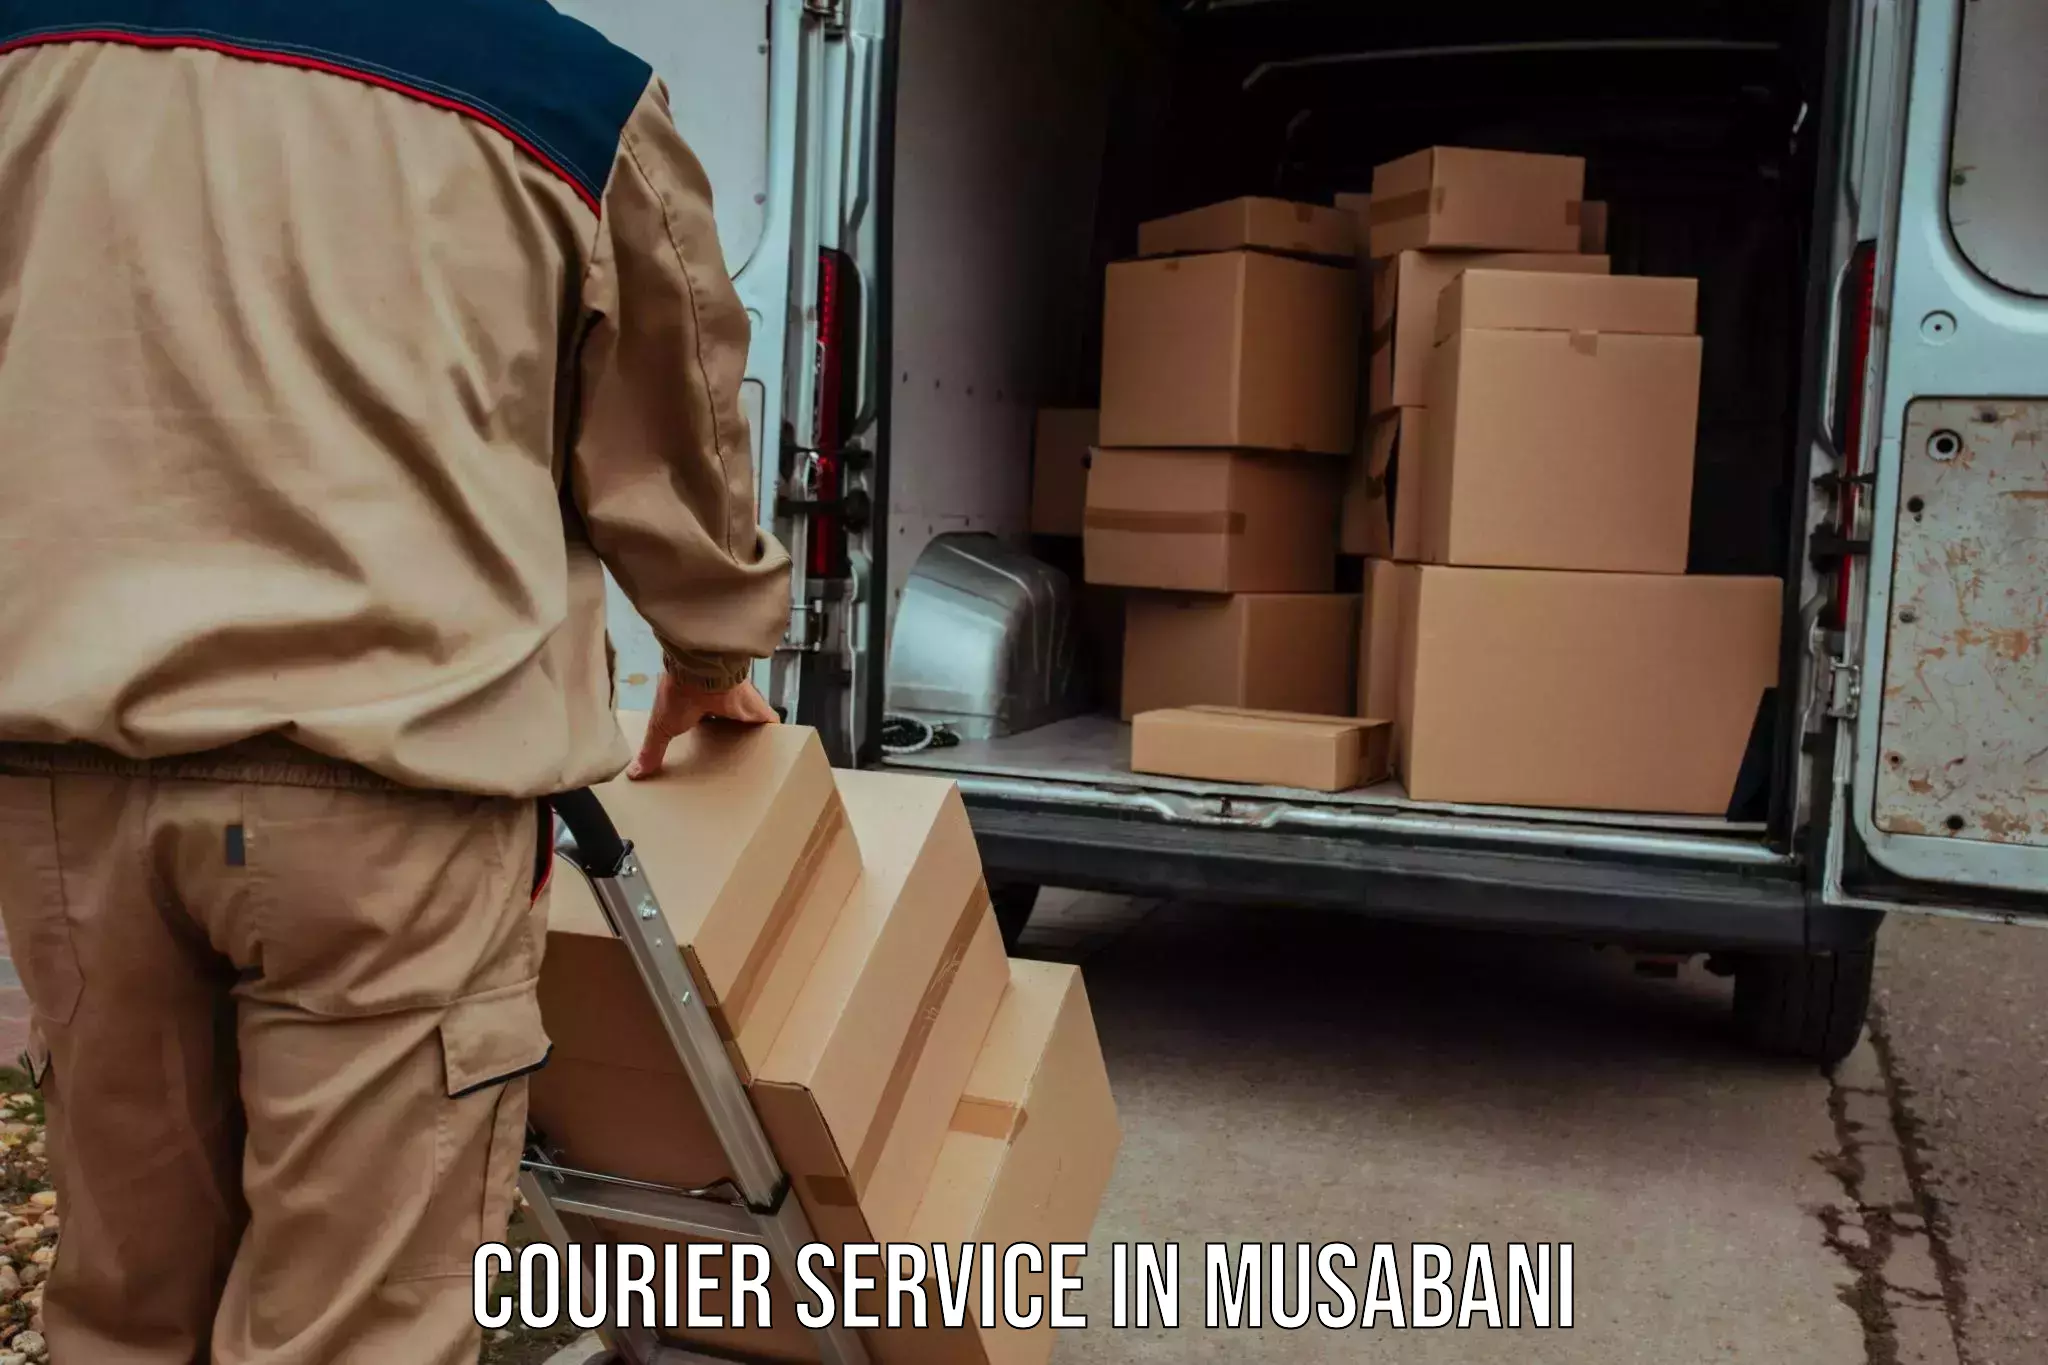 Courier service comparison in Musabani